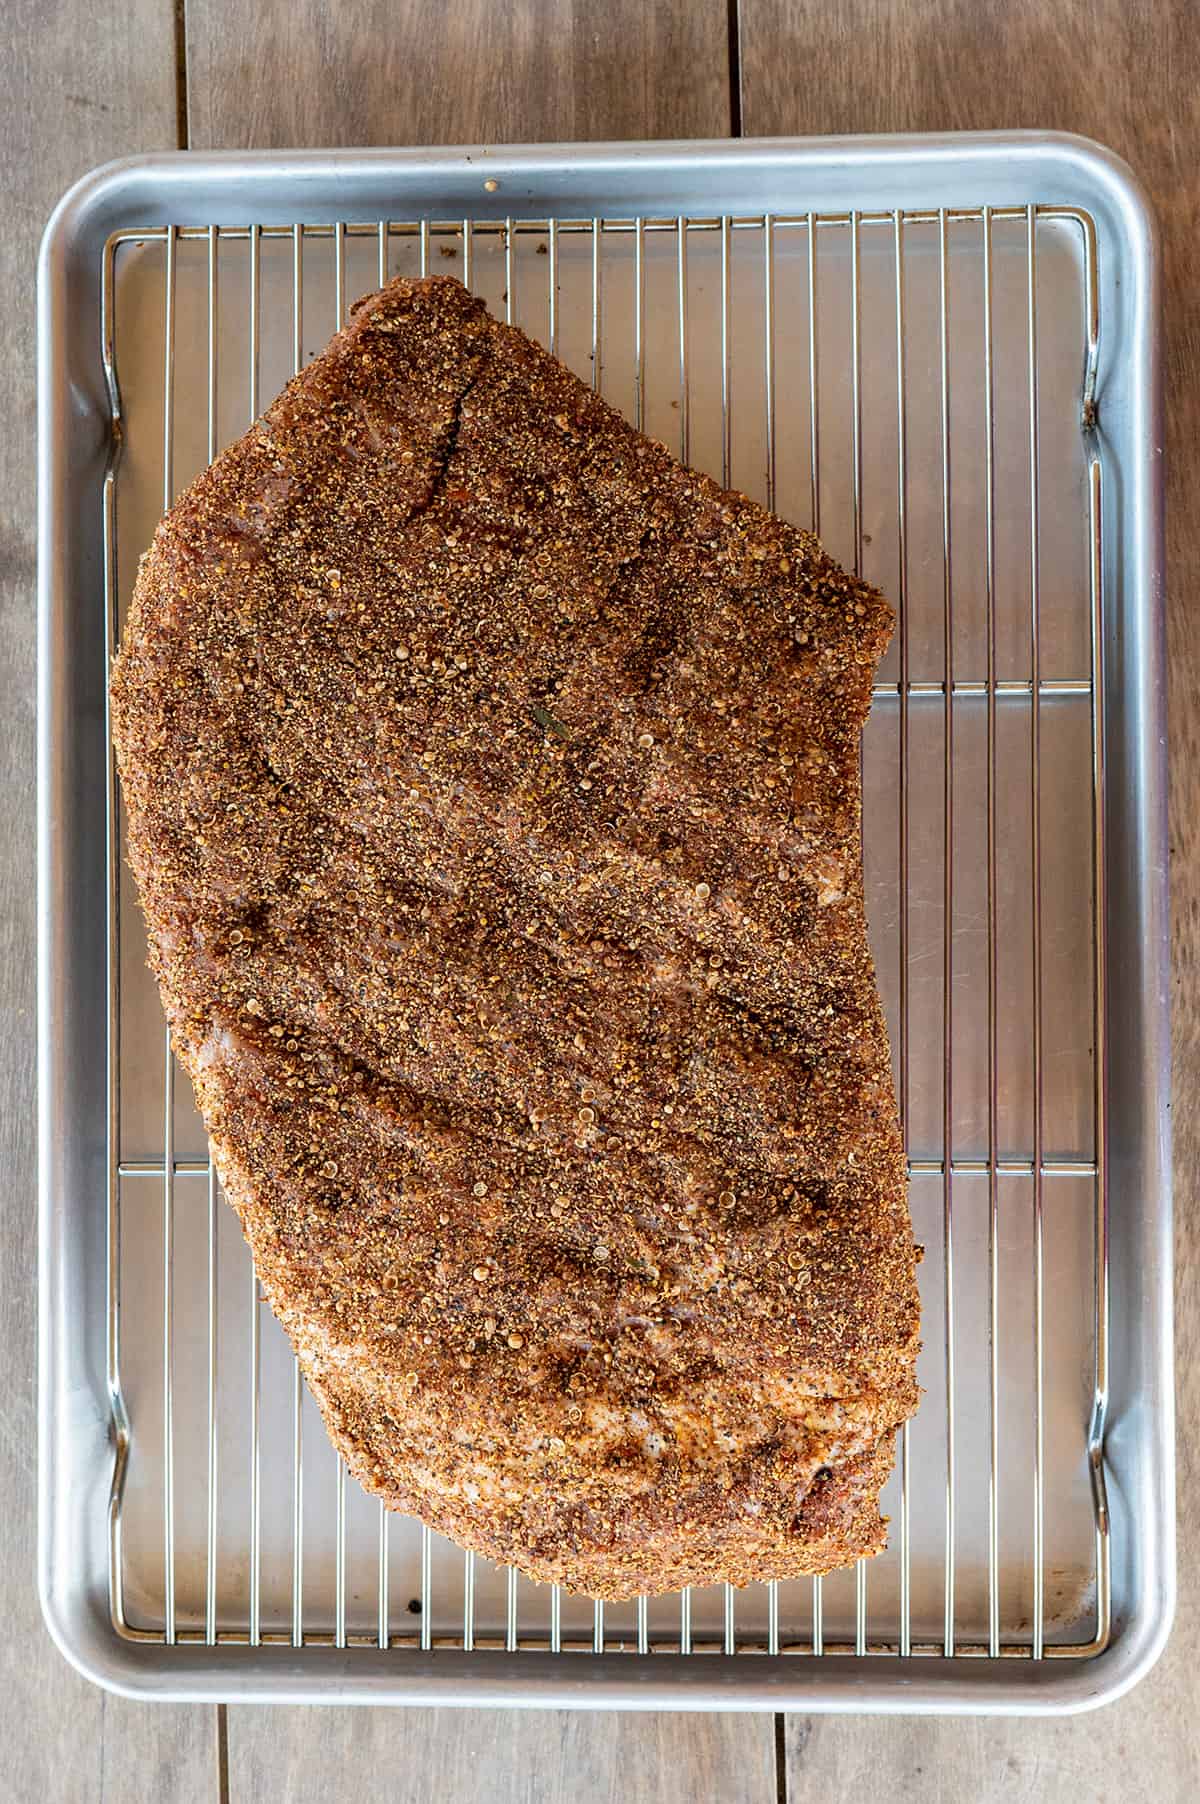 Seasoned raw corned beef brisket on baking rack. 